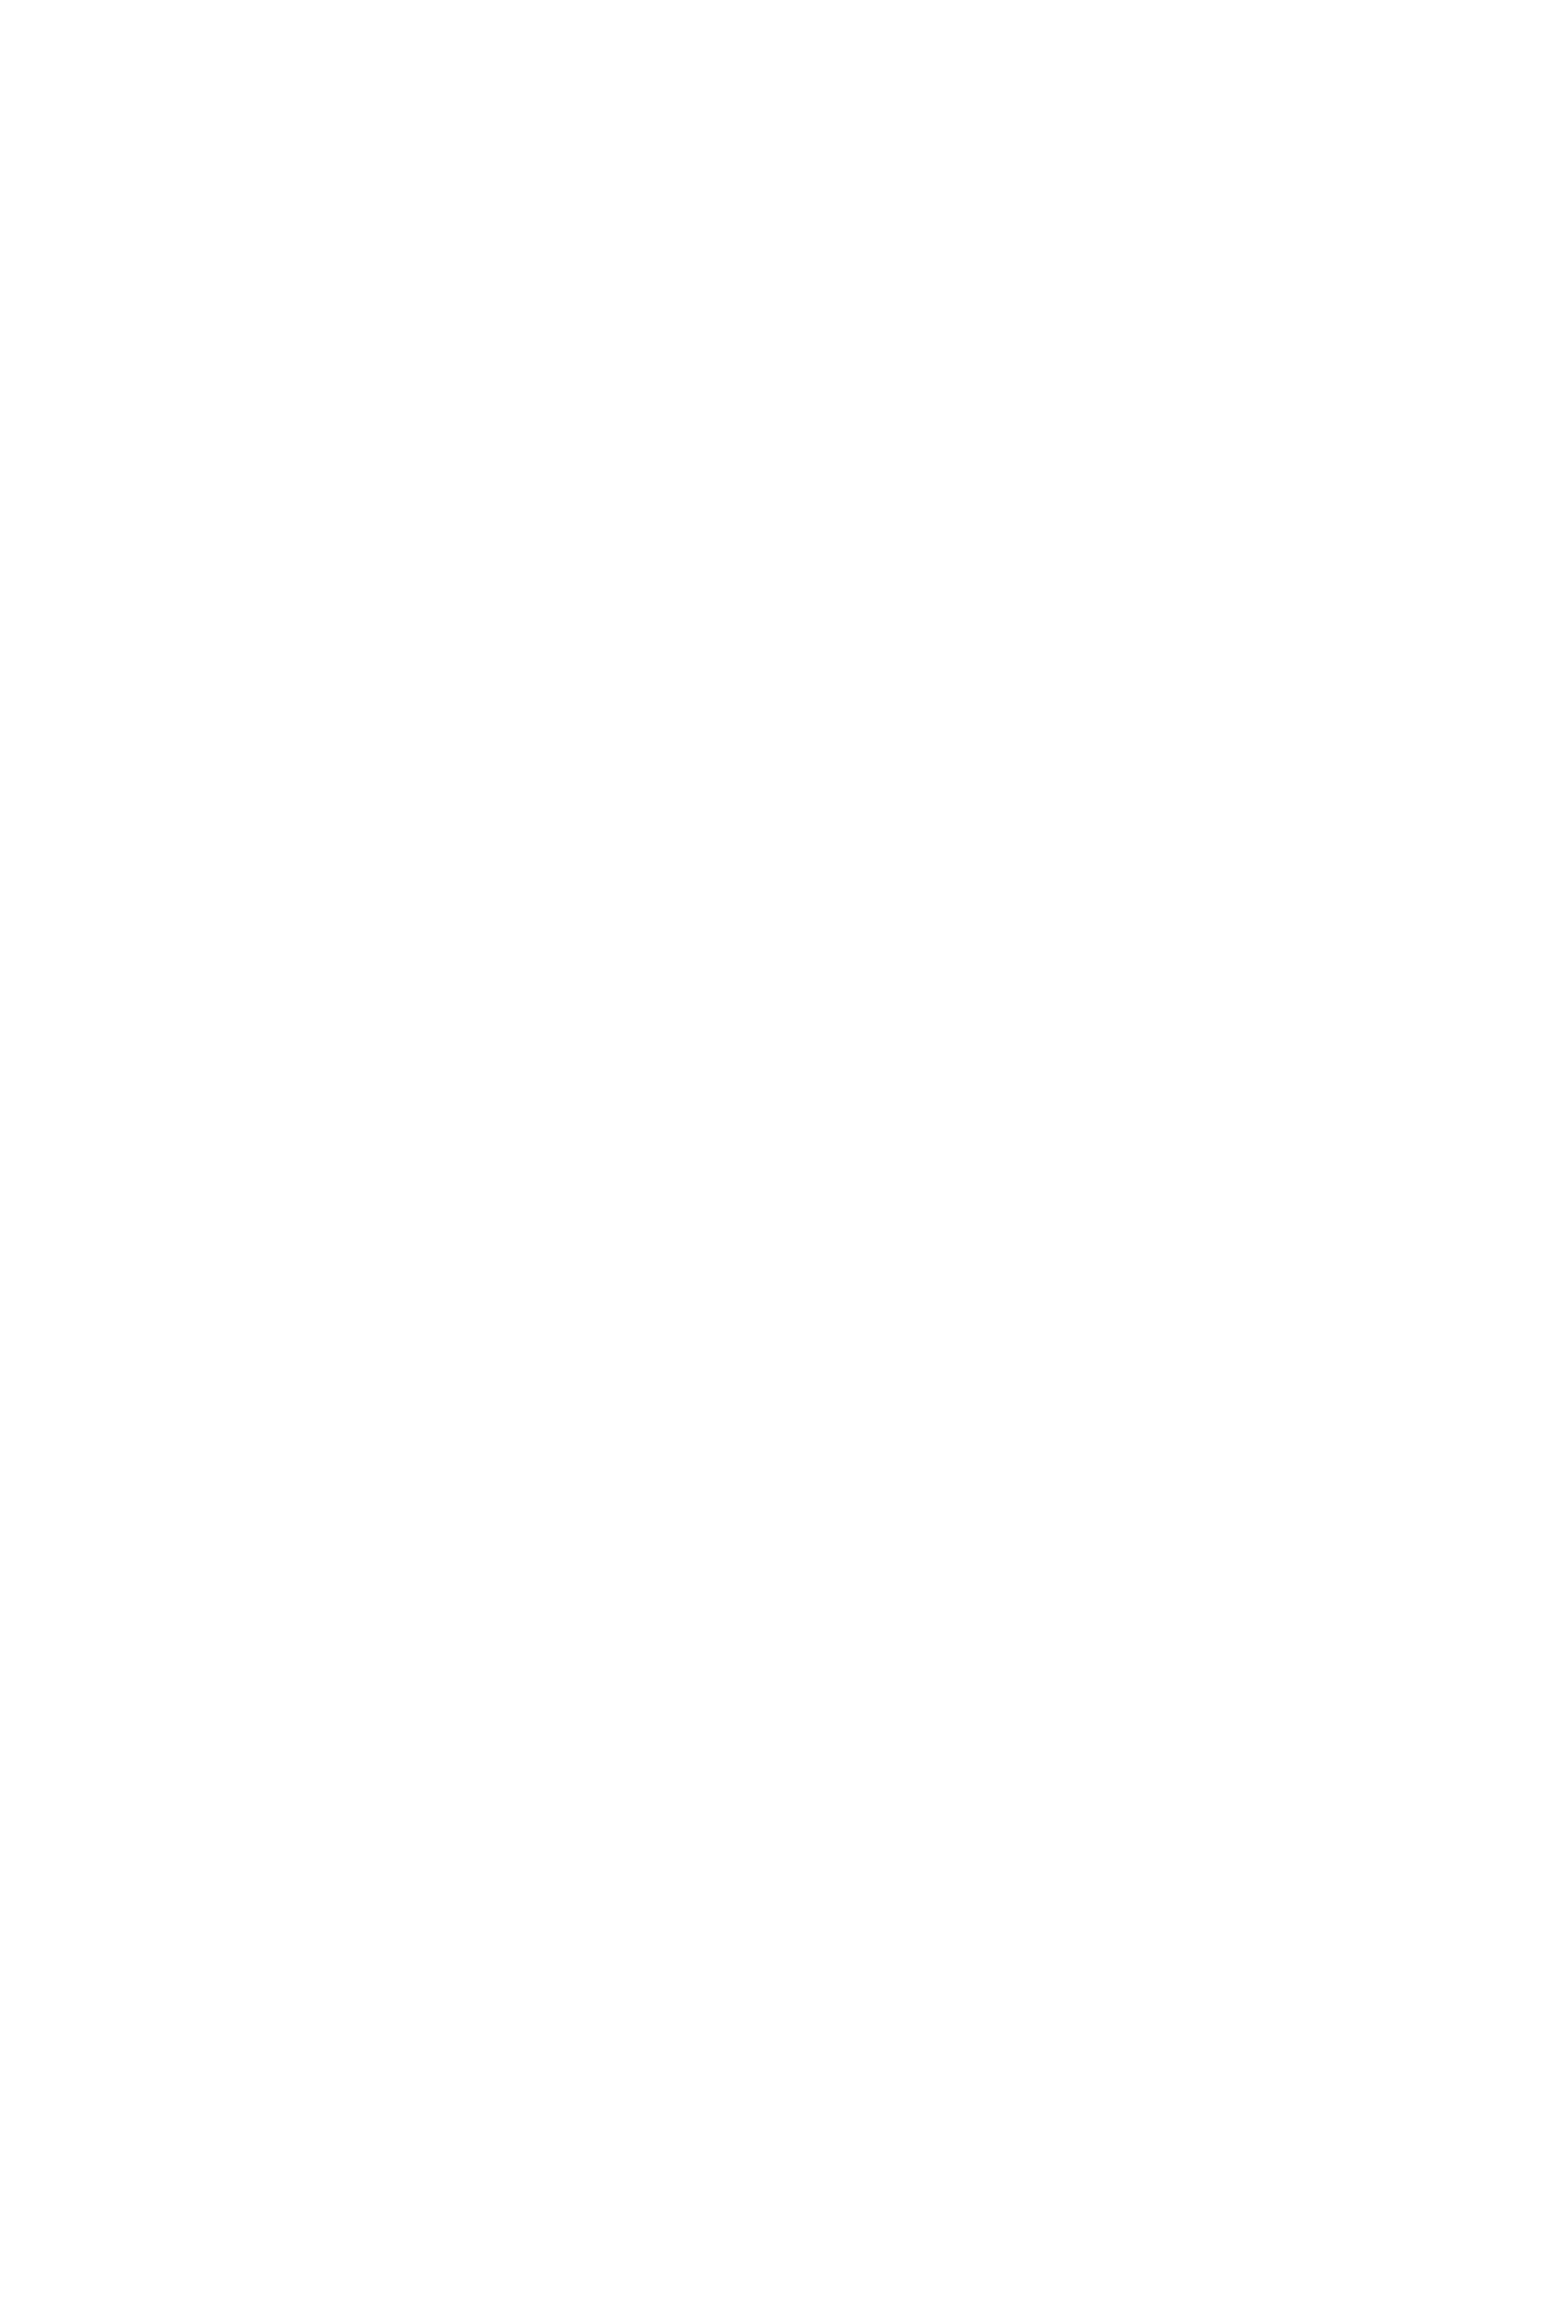 Samsung logo pour fonds sombres (PNG transparent)